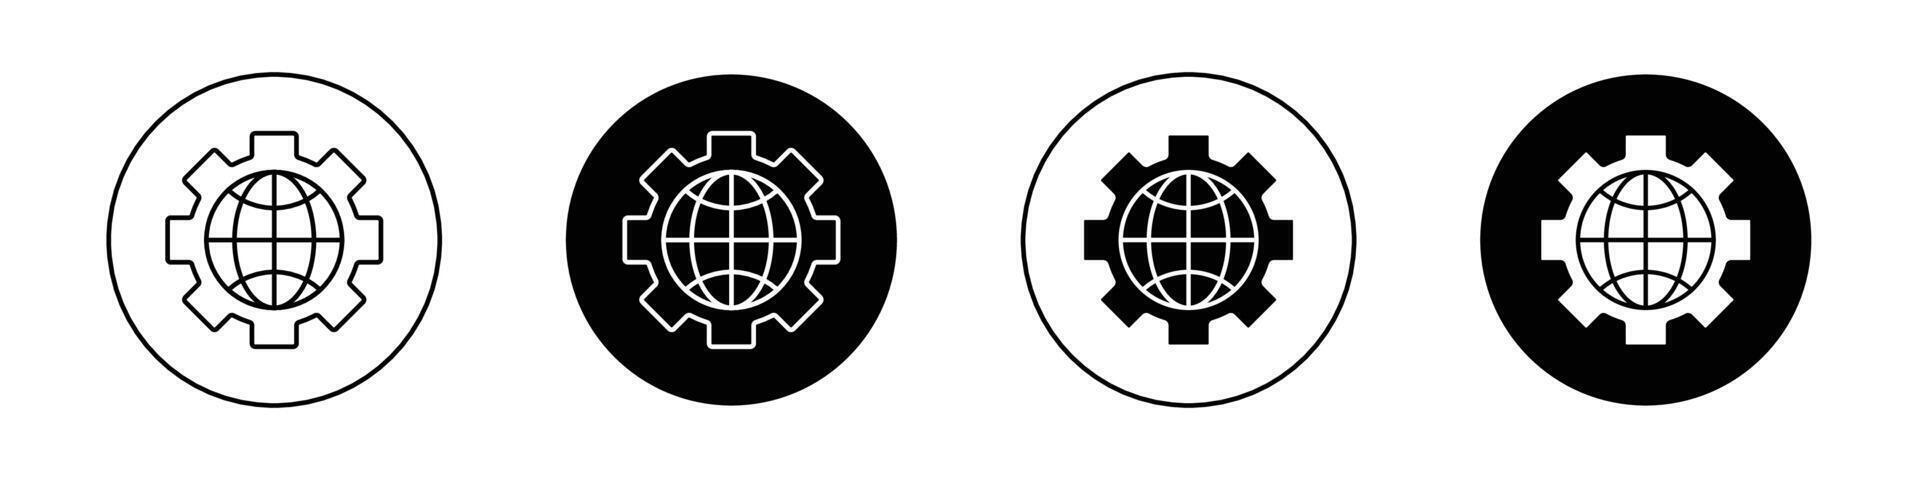 Globalization vector icon